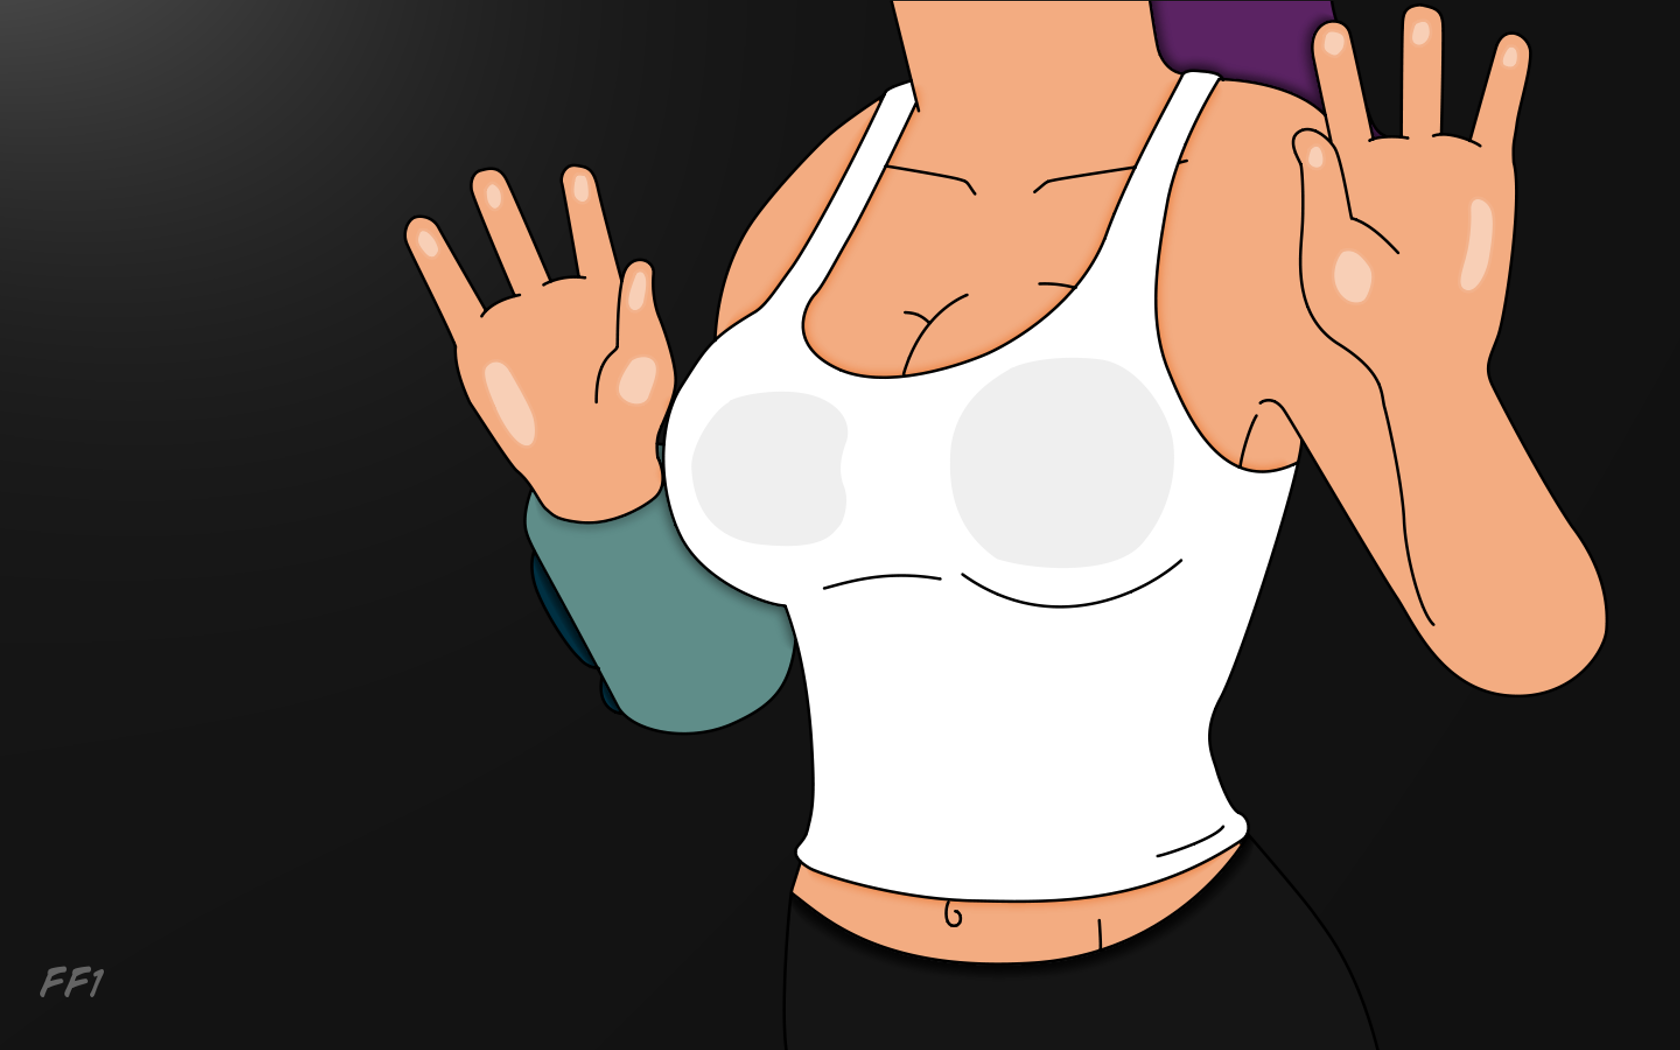 General 1680x1050 Futurama arms up Turanga Leela boobs cartoon fan art black background TV series boobs on glass